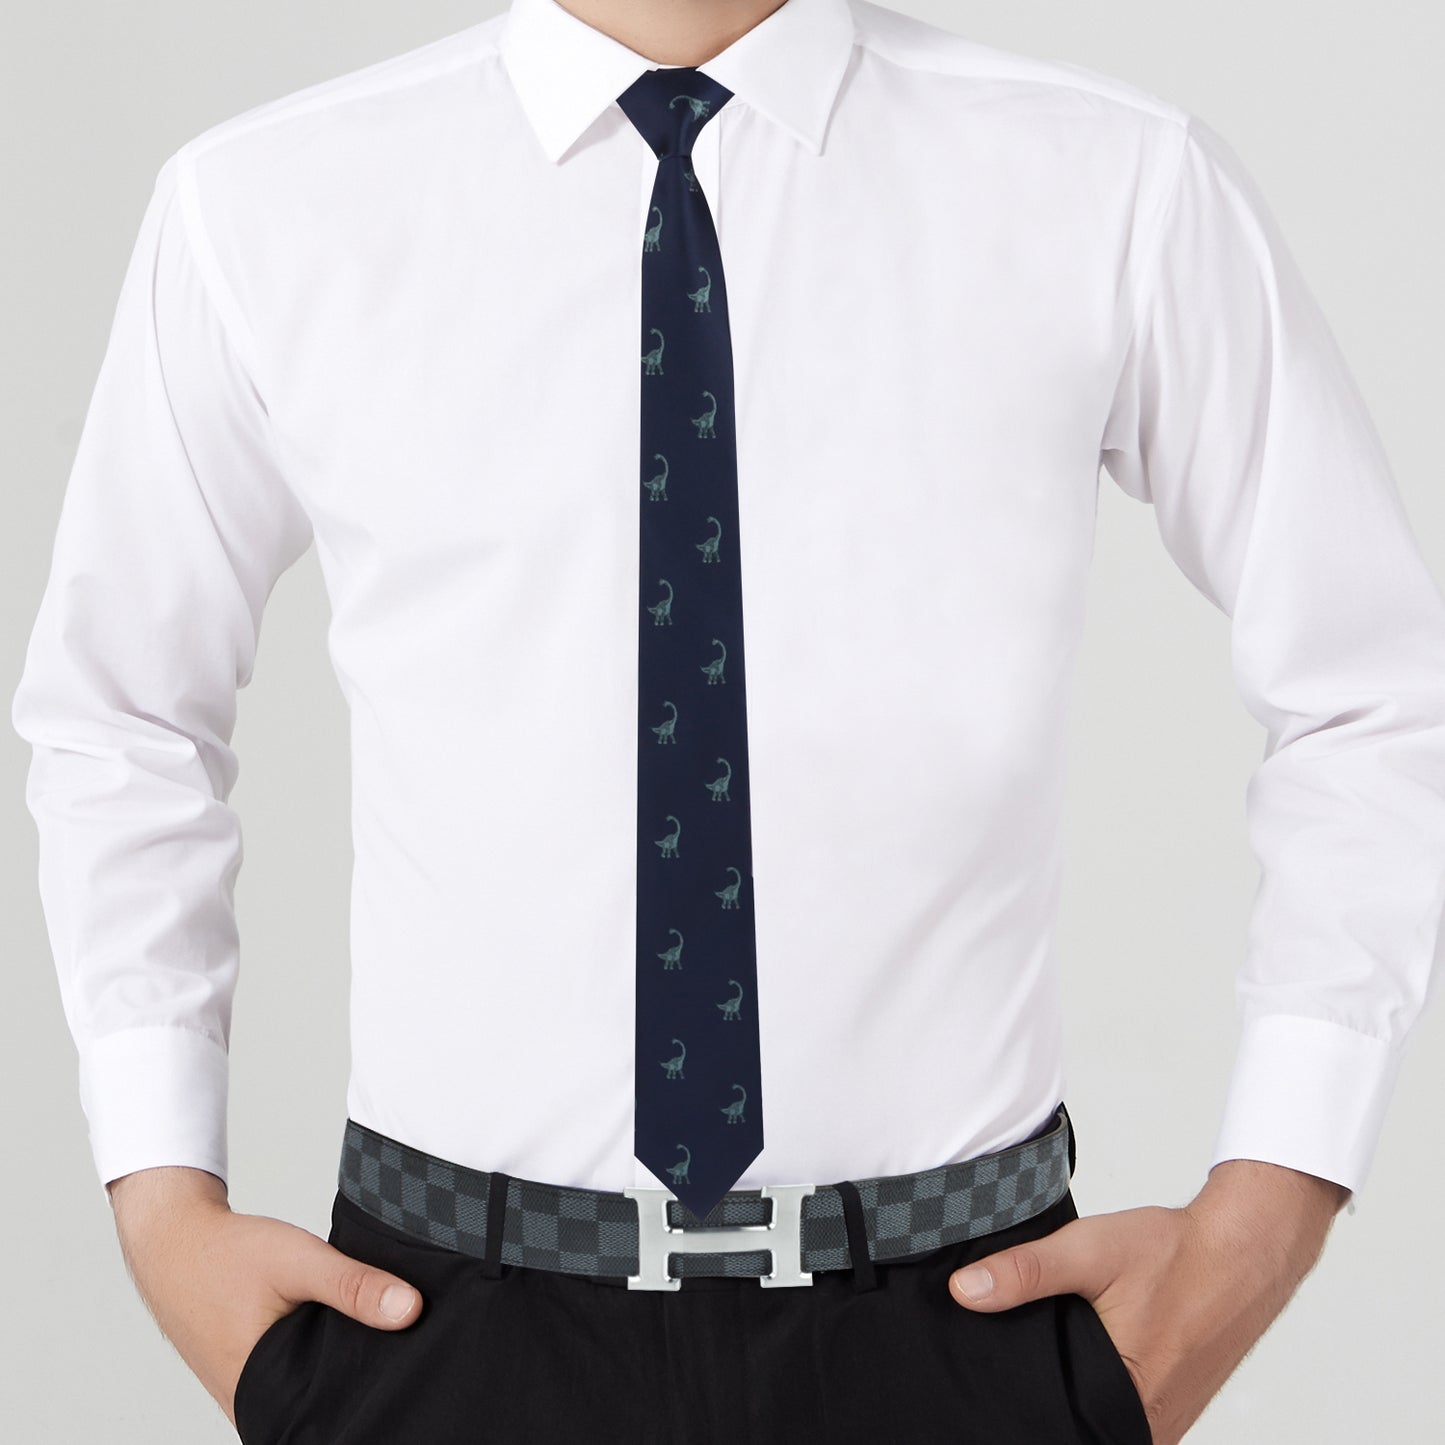 A man wearing a Brontosaurus Skinny Tie and white shirt, showcasing dino elegance.